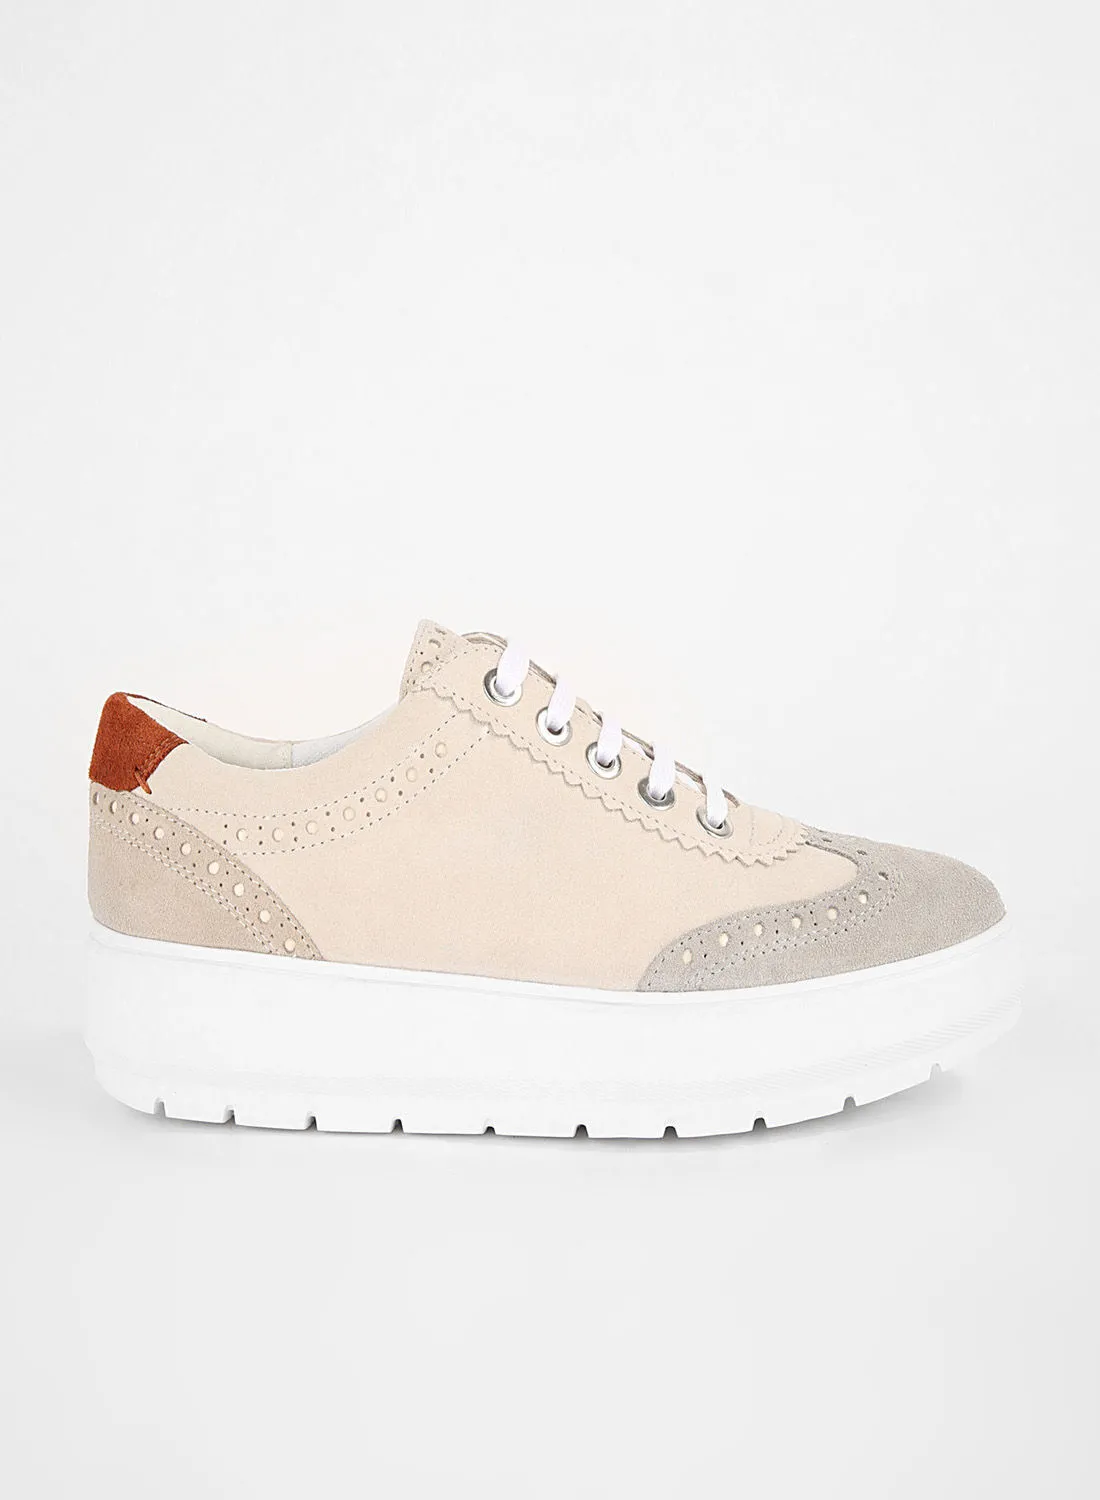 GEOX Casual Sneakers Cream/Lt Grey